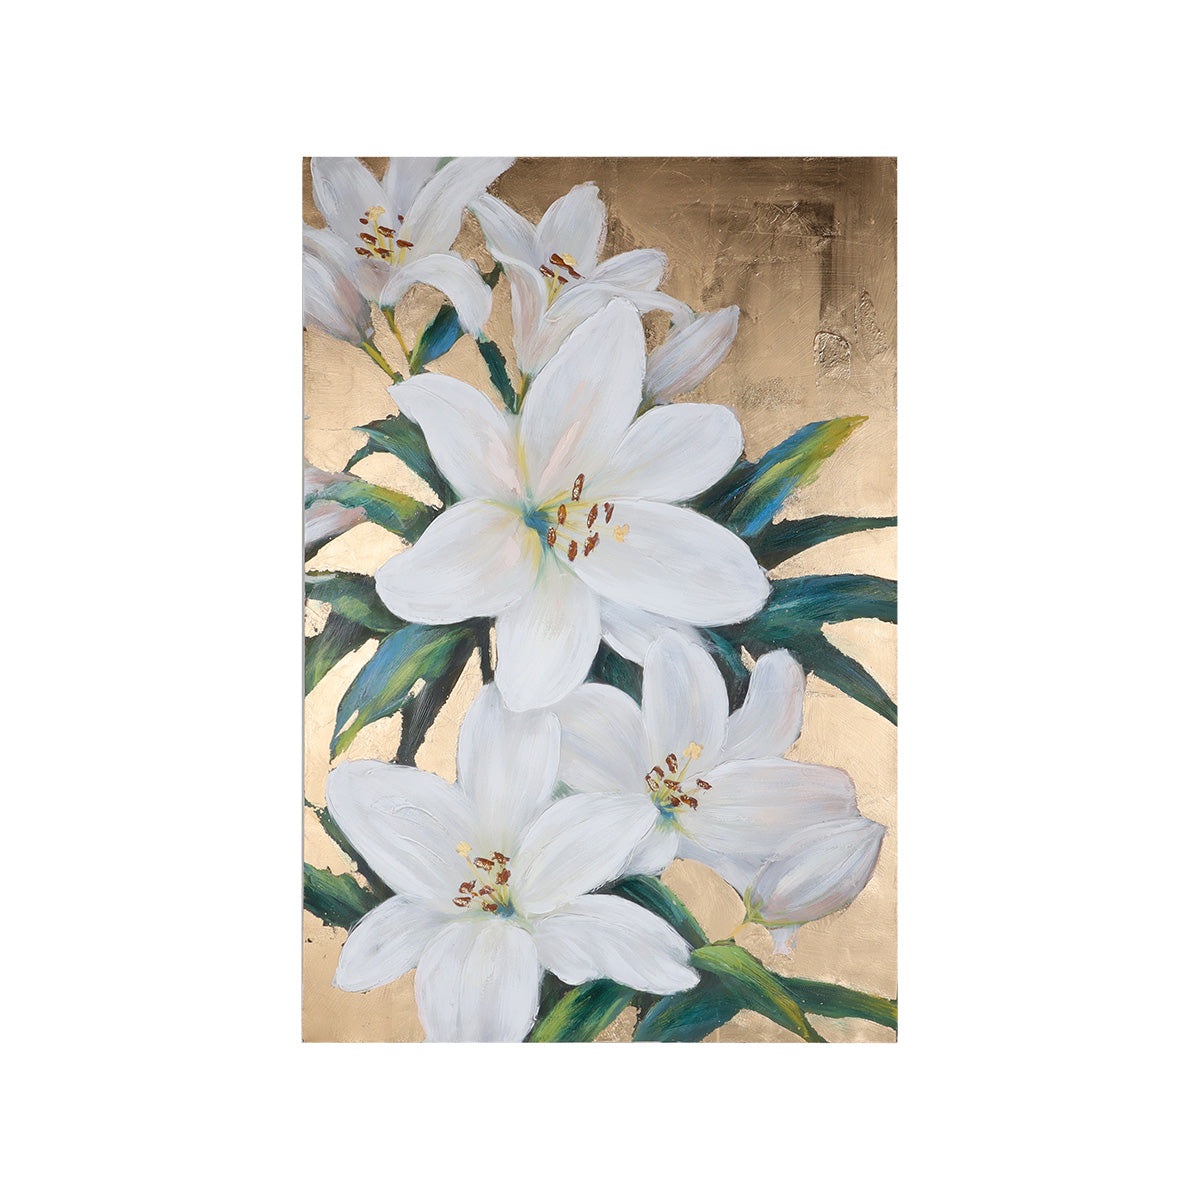 Isula White Lilies Wall Art | Vinoti Living